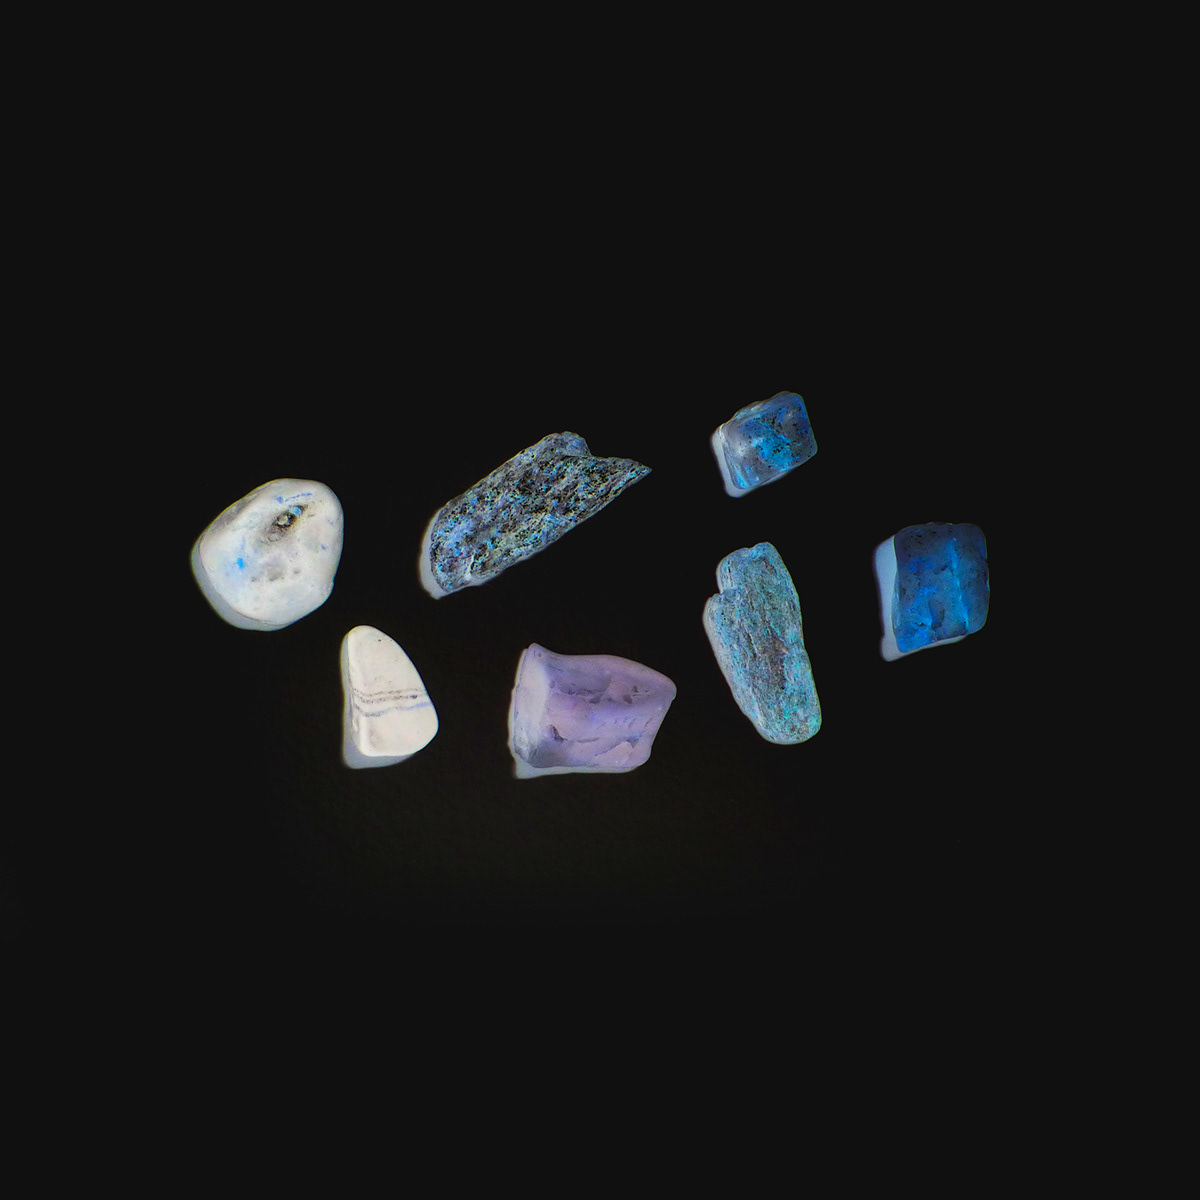 Alaska rocks Gems minerals photoshop layers blend collage